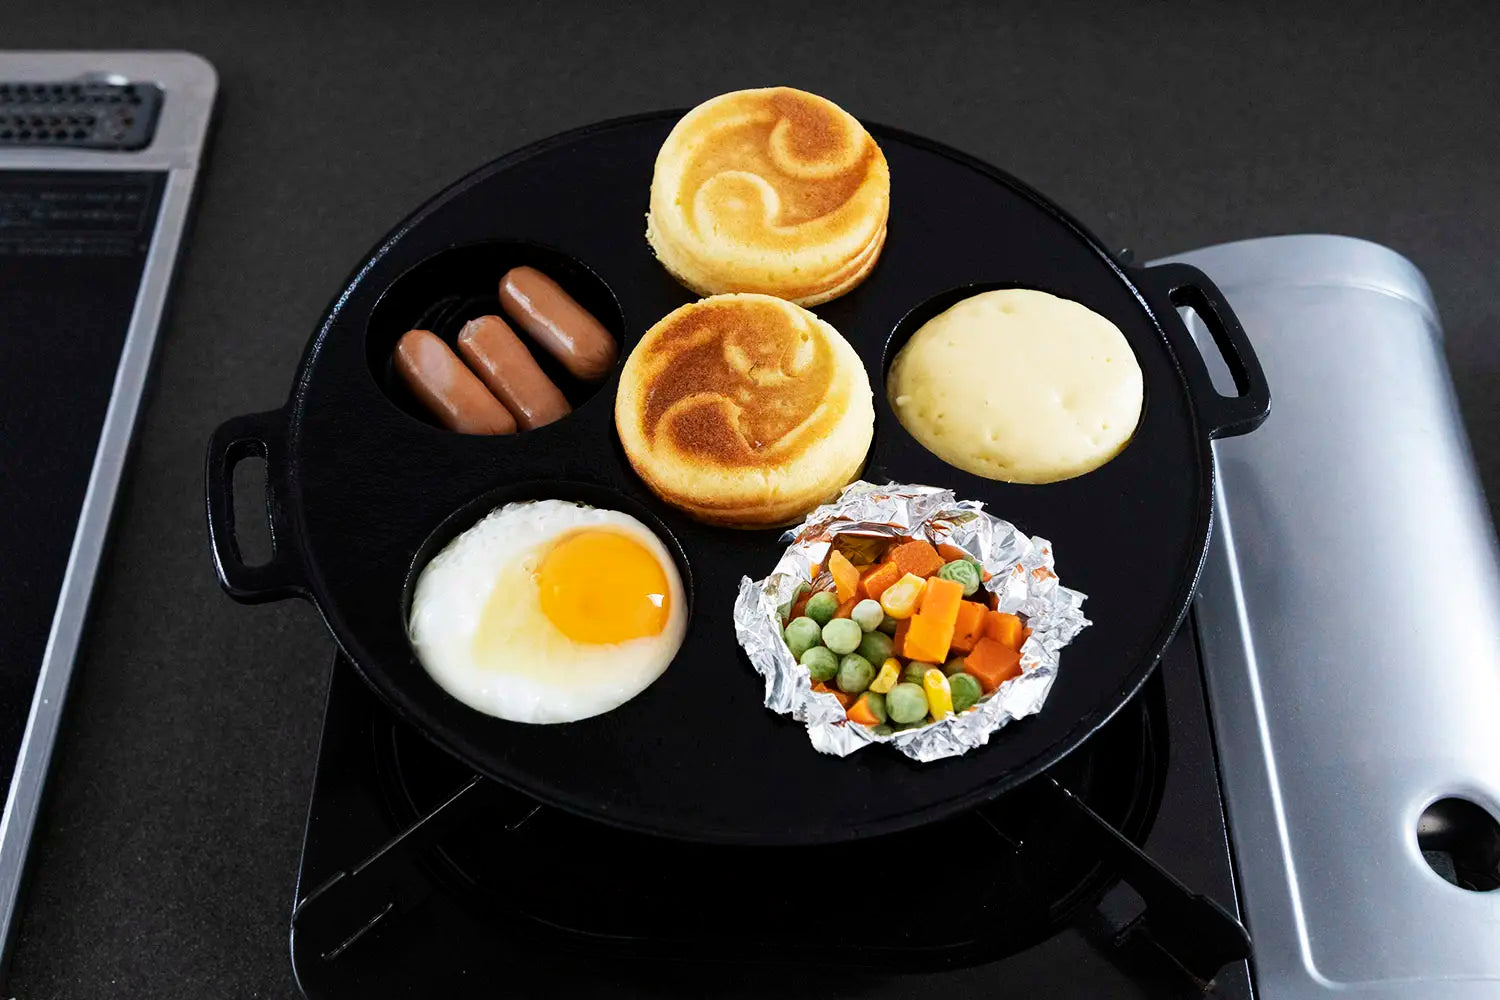 Weiners, vegetables, and eggs cooking together with obanyaki in the Gifu-Asahi Obanyaki Pan